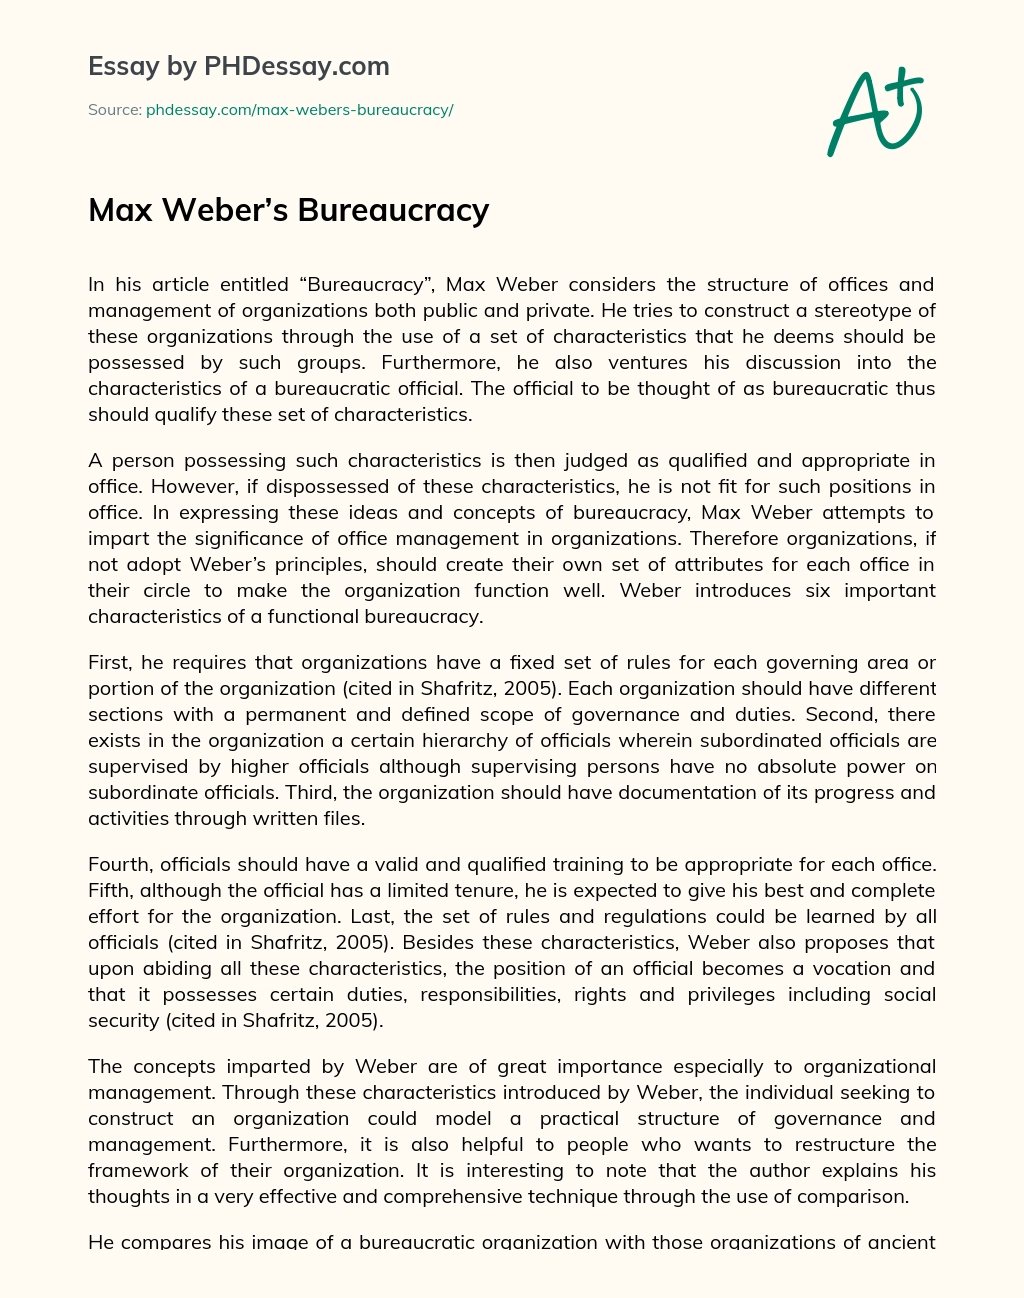 Max Weber’s Bureaucracy essay